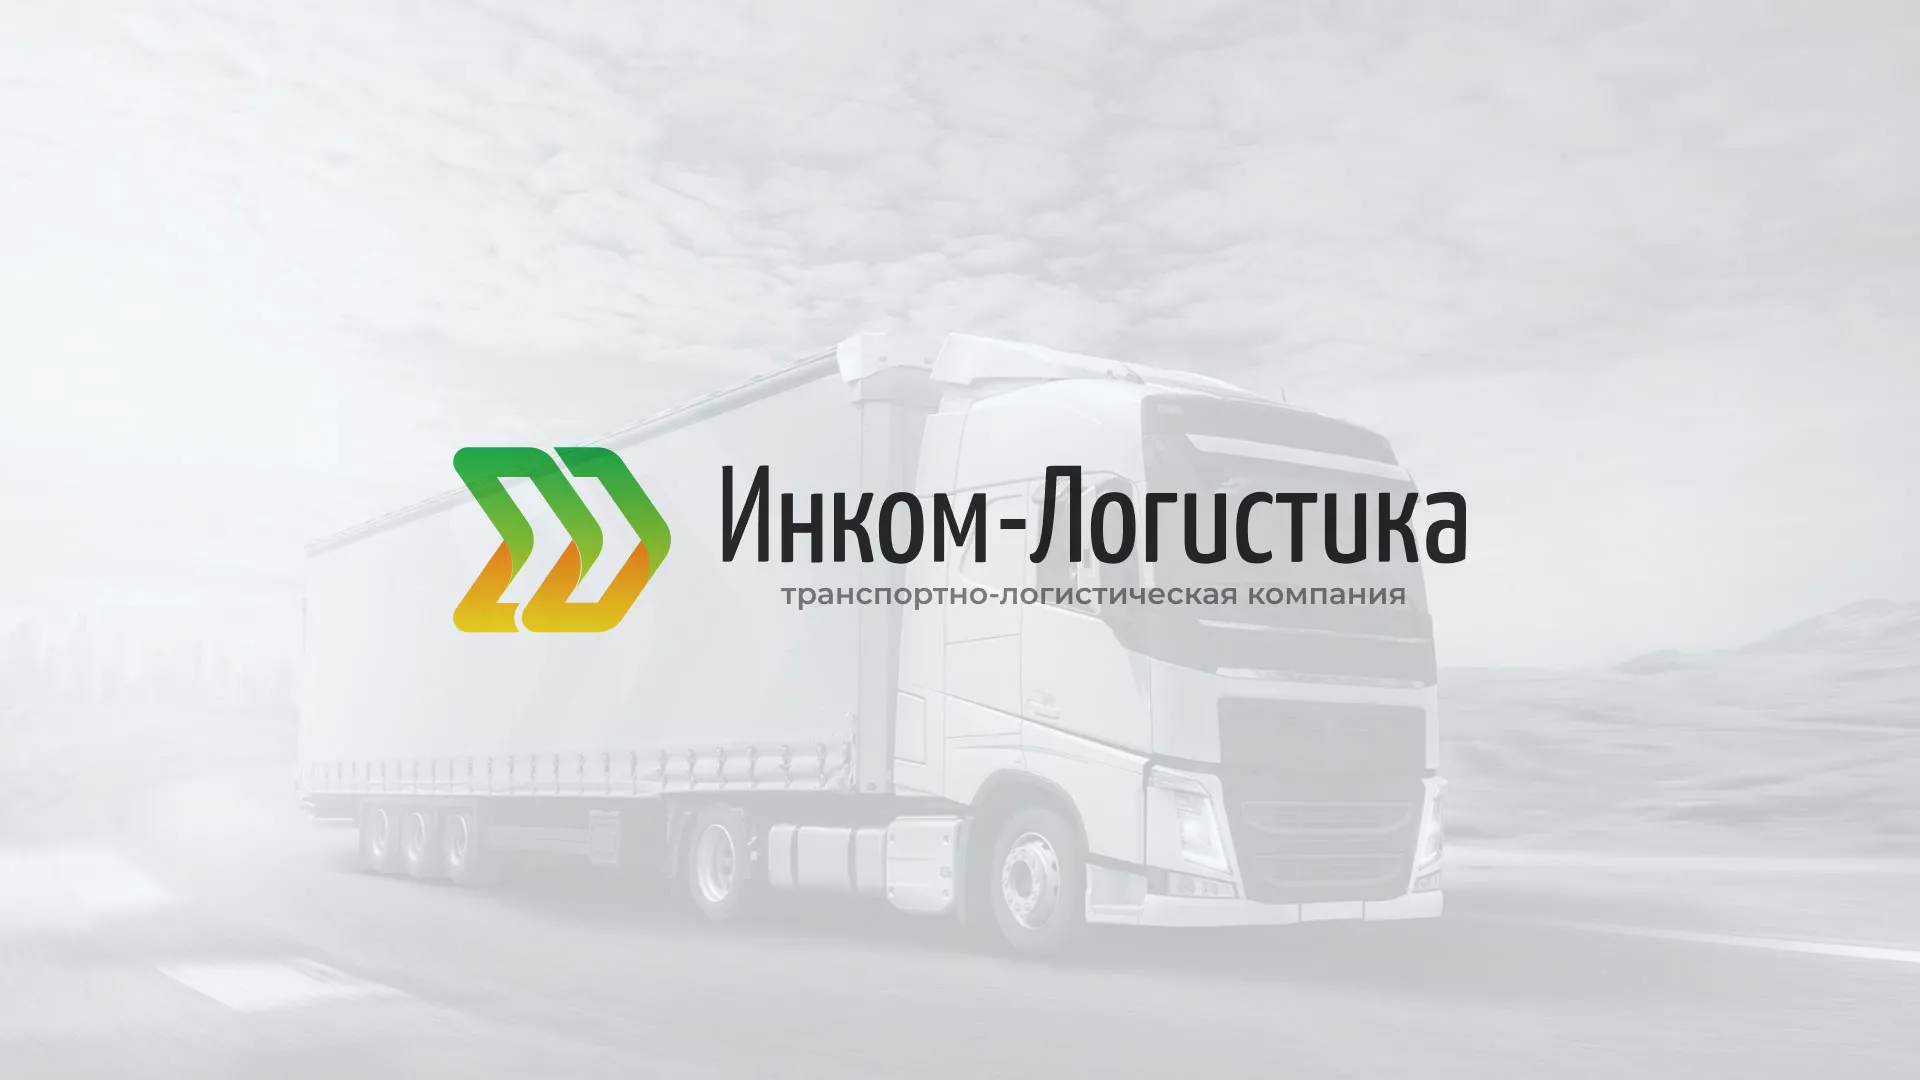 Разработка логотипа и сайта компании «Инком-Логистика» в Краснодаре